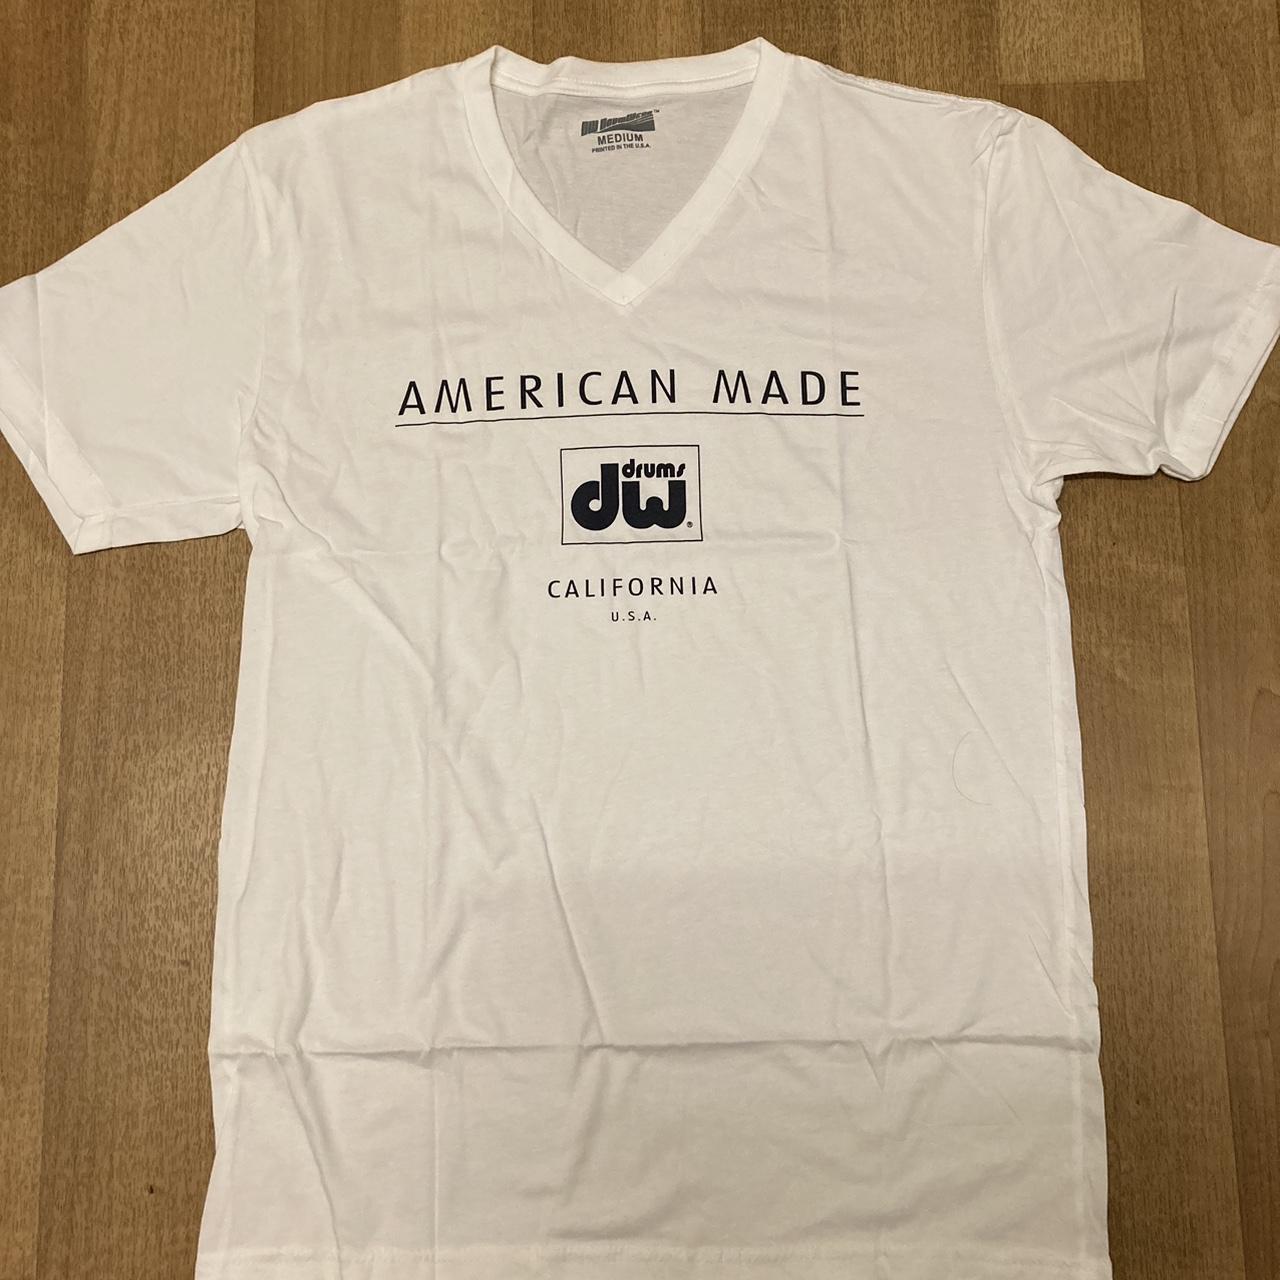 DW Men's White and Black T-shirt